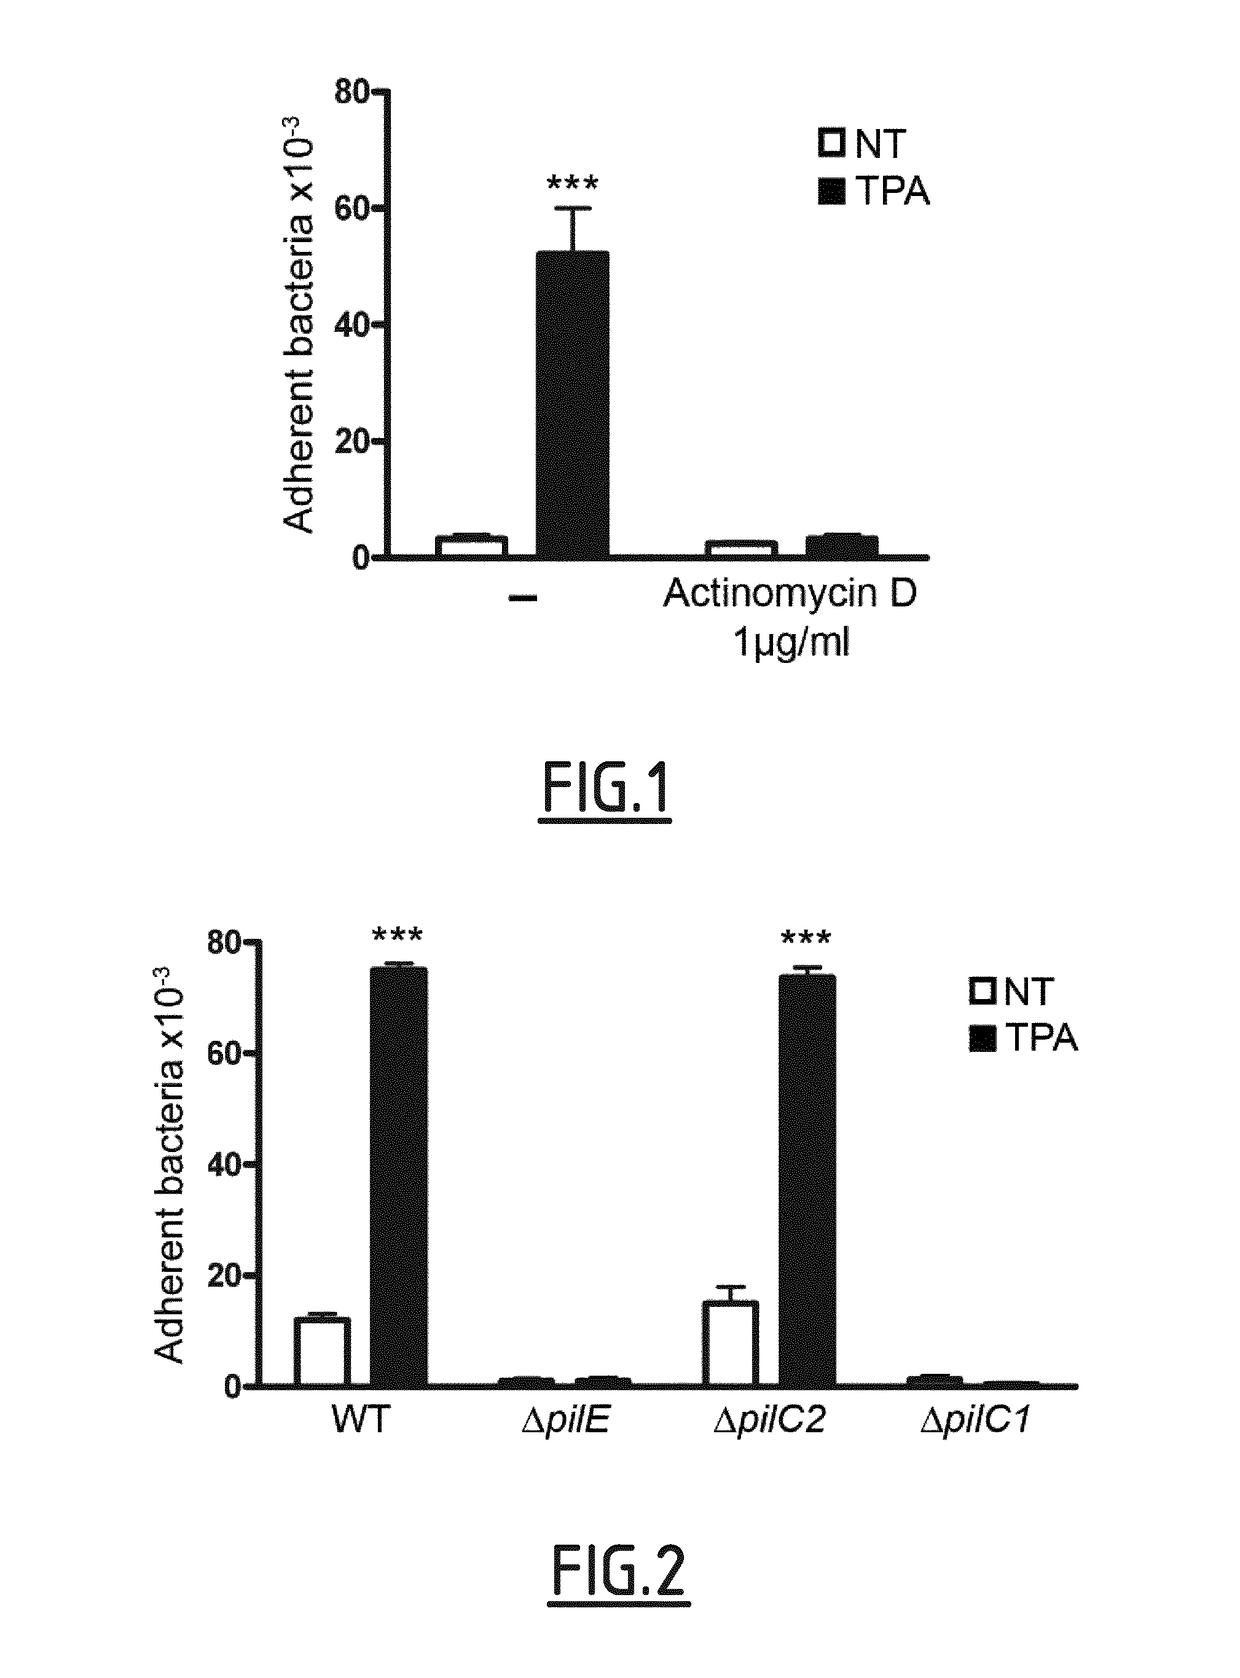 CD147 as receptor for pilus-mediated adhesion of <i>Meningococci </i>to vascular endothelia